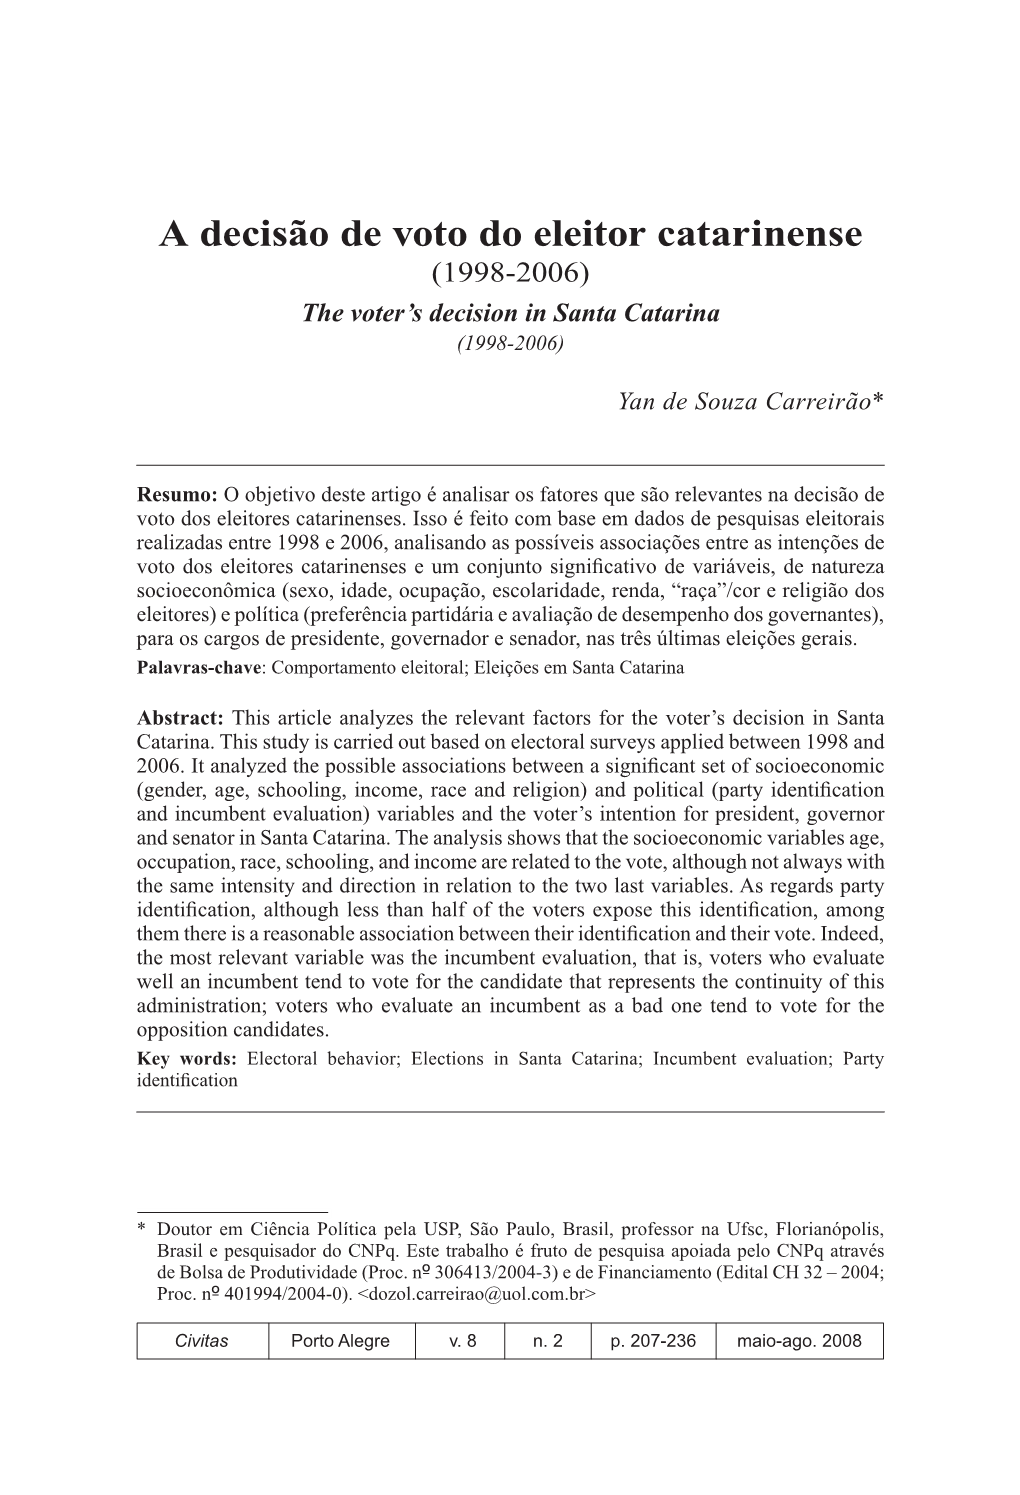 A Decisão De Voto Do Eleitor Catarinense (1998-2006) the Voter’S Decision in Santa Catarina (1998-2006)